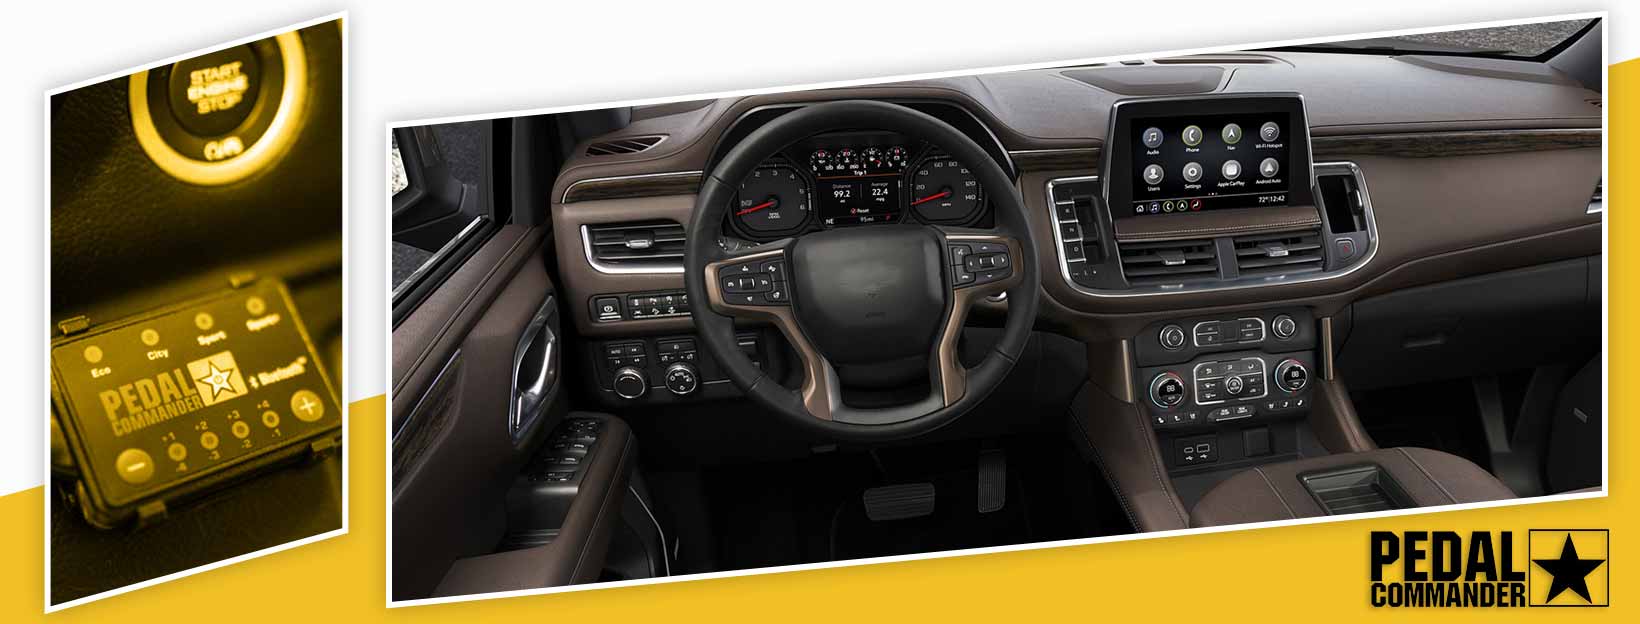 Pedal Commander for Chevrolet Suburban - interior